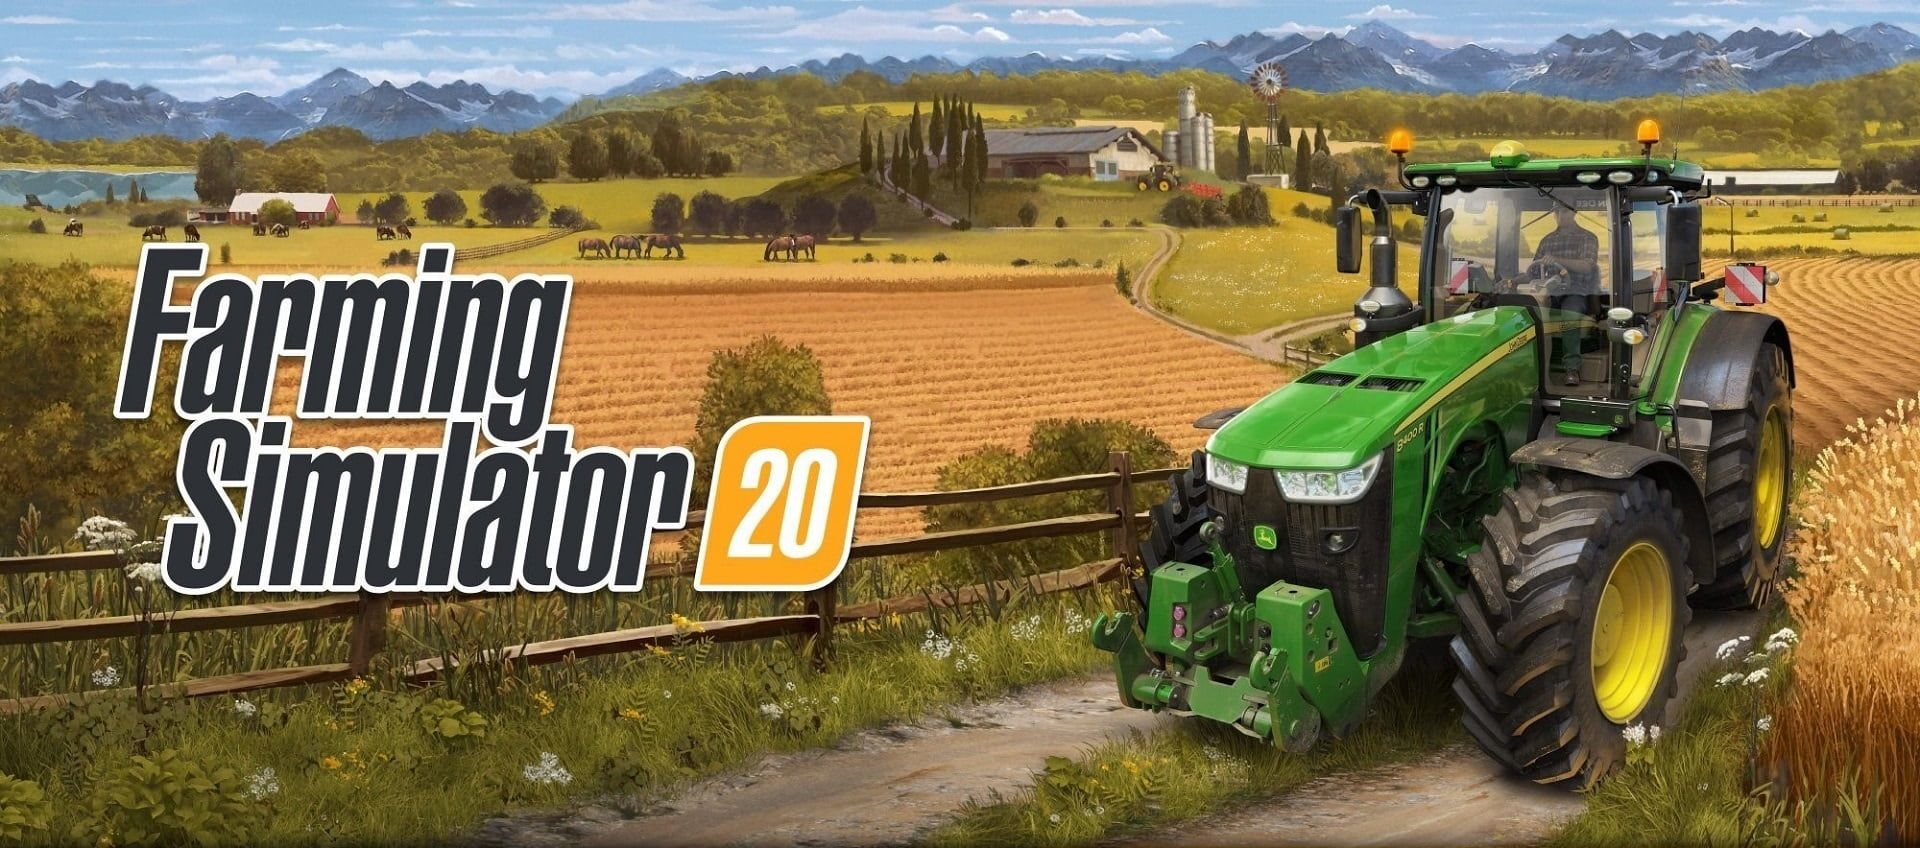 about farming simulator 14 pc